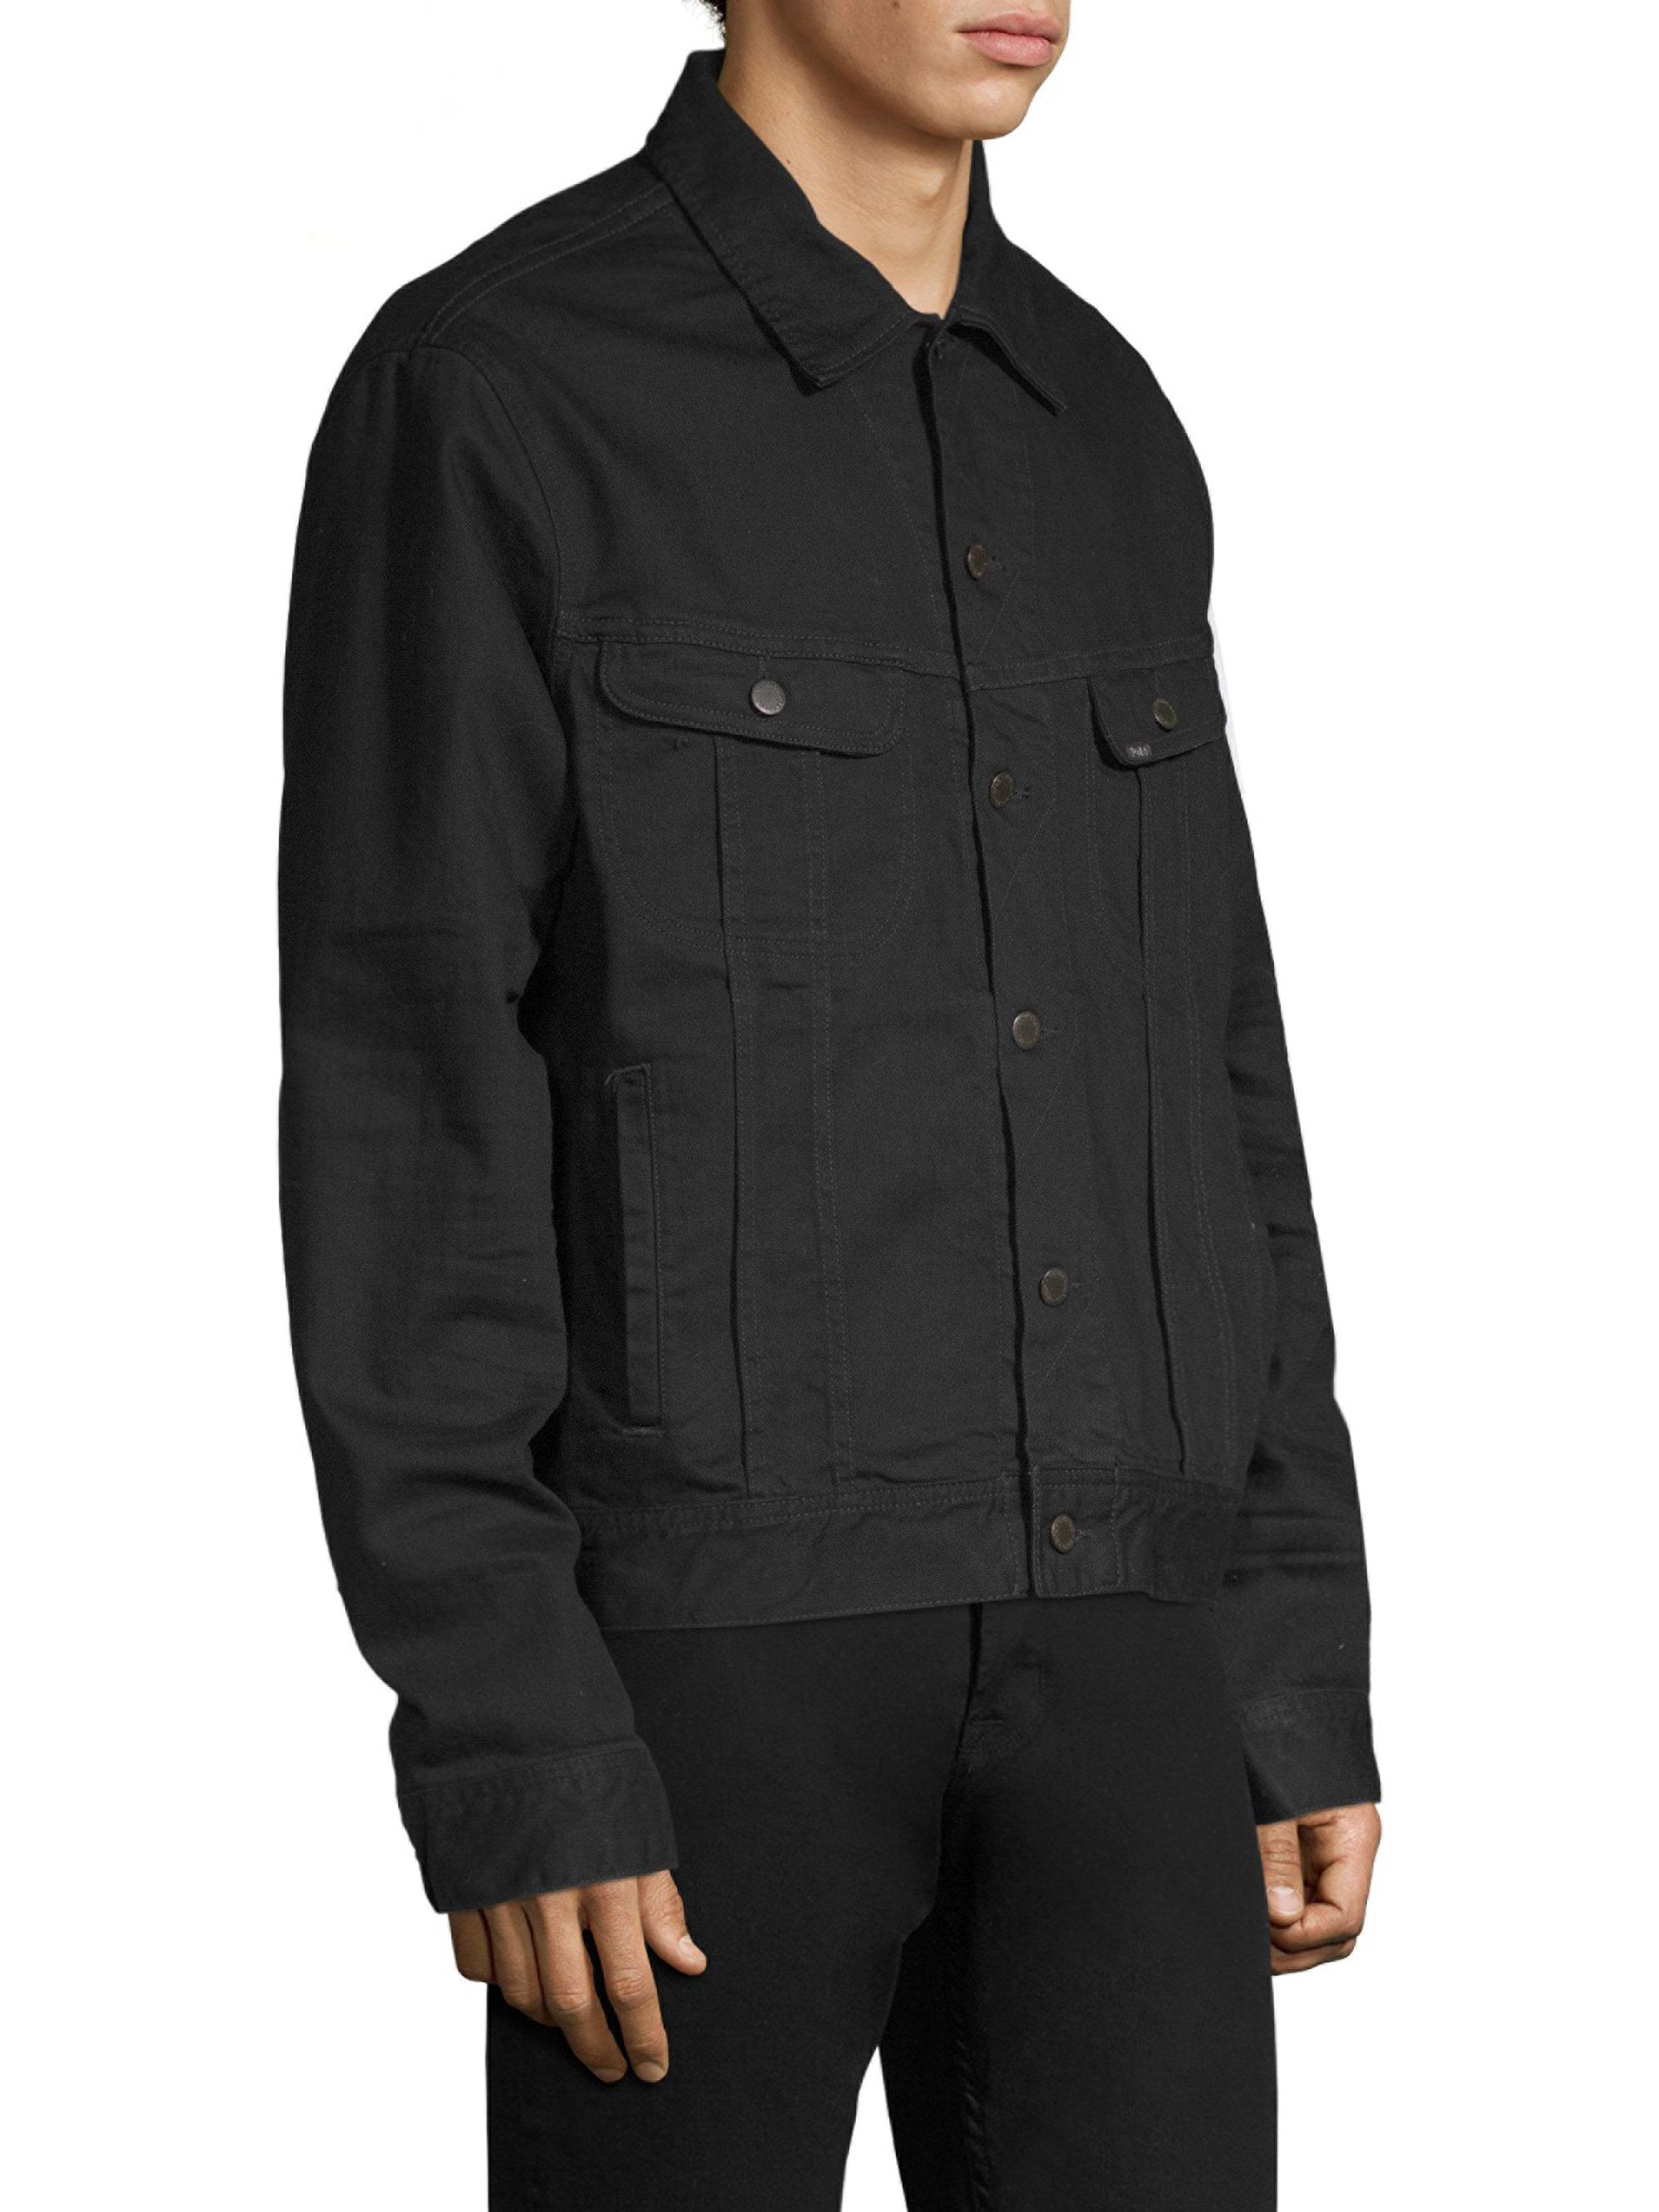 Polo Ralph Lauren Stretch Denim Trucker Jacket in Black for Men - Lyst